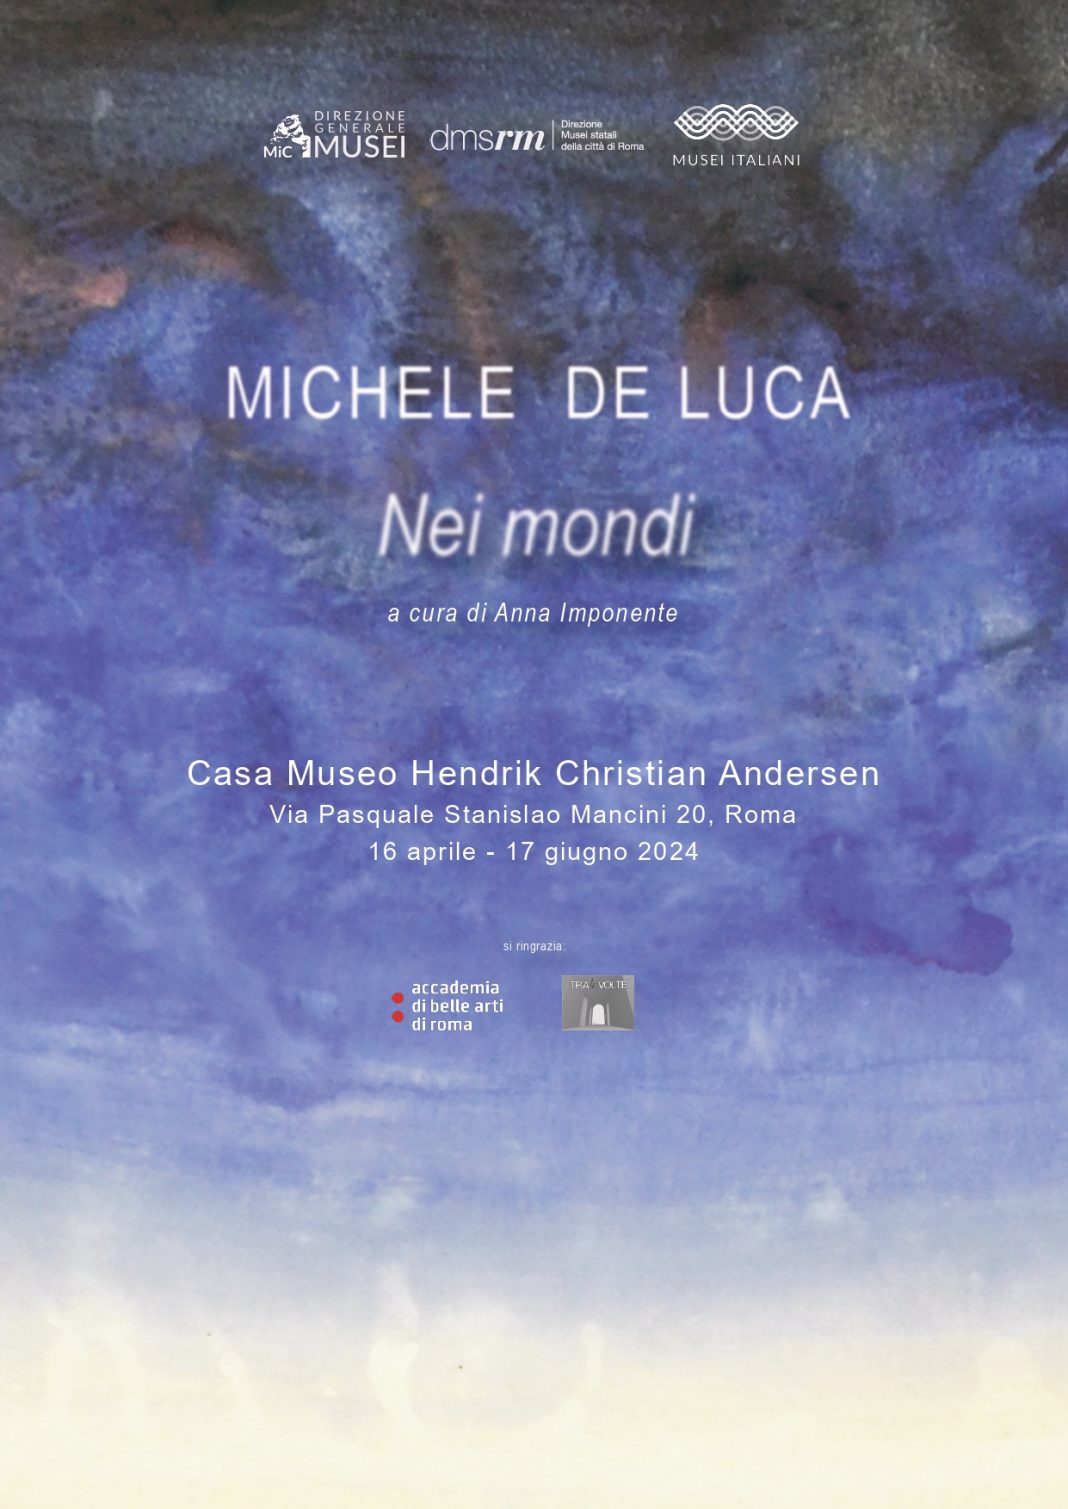 MICHELE DE LUCA – Nei mondihttps://www.exibart.com/repository/media/formidable/11/img/4be/locandina-de-luca-1068x1509.jpg